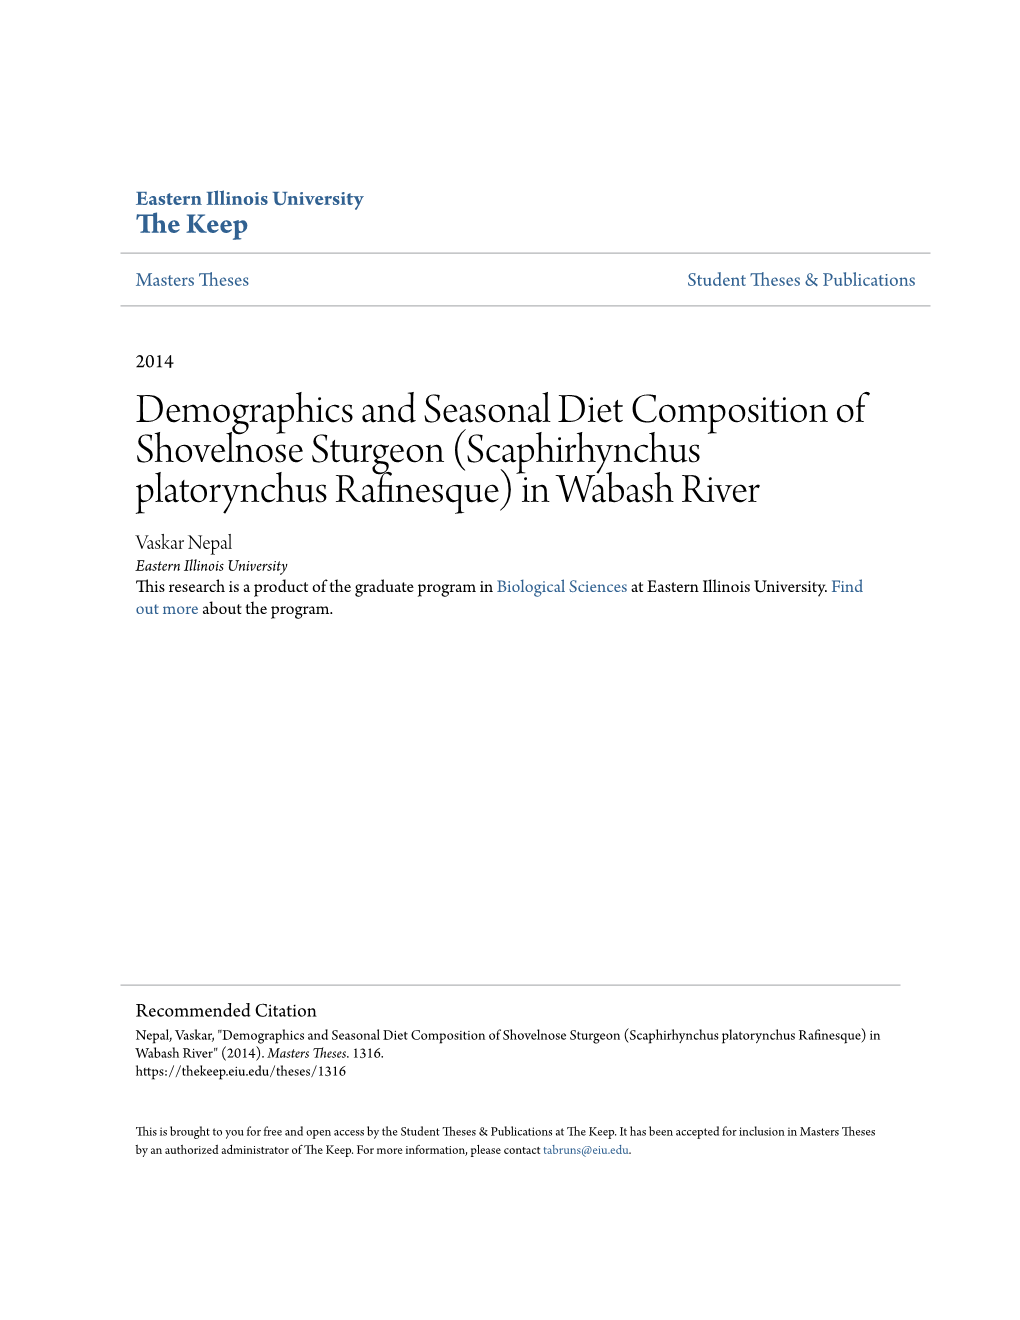 Demographics and Seasonal Diet Composition of Shovelnose Sturgeon (Scaphirhynchus Platorynchus Rafinesque) in Wabash River